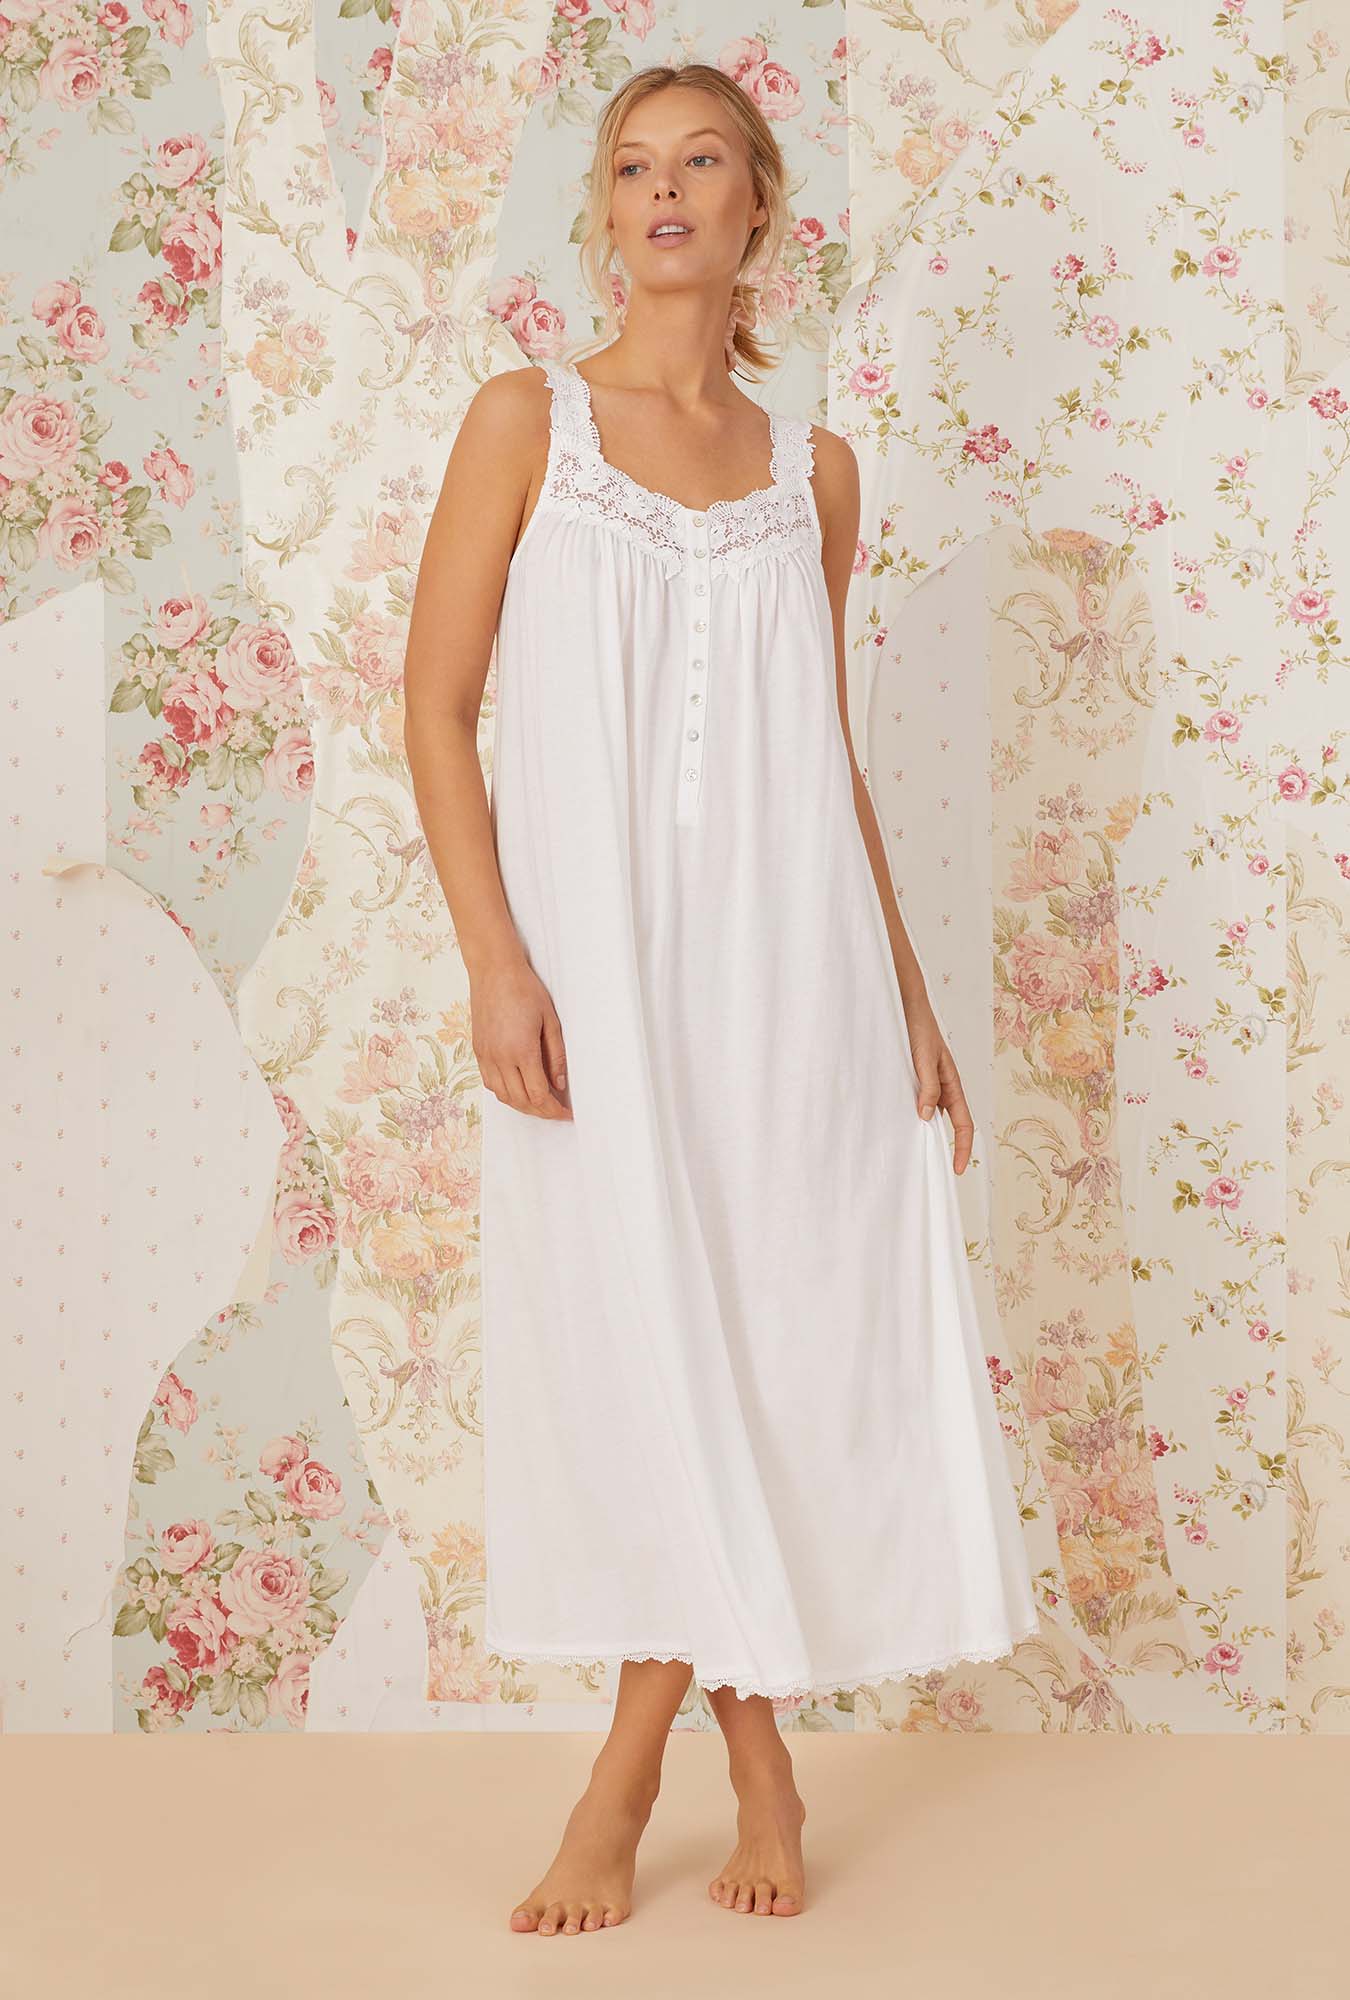 A lady wearing white sleeveless villa blanca knit ballet nightgown.